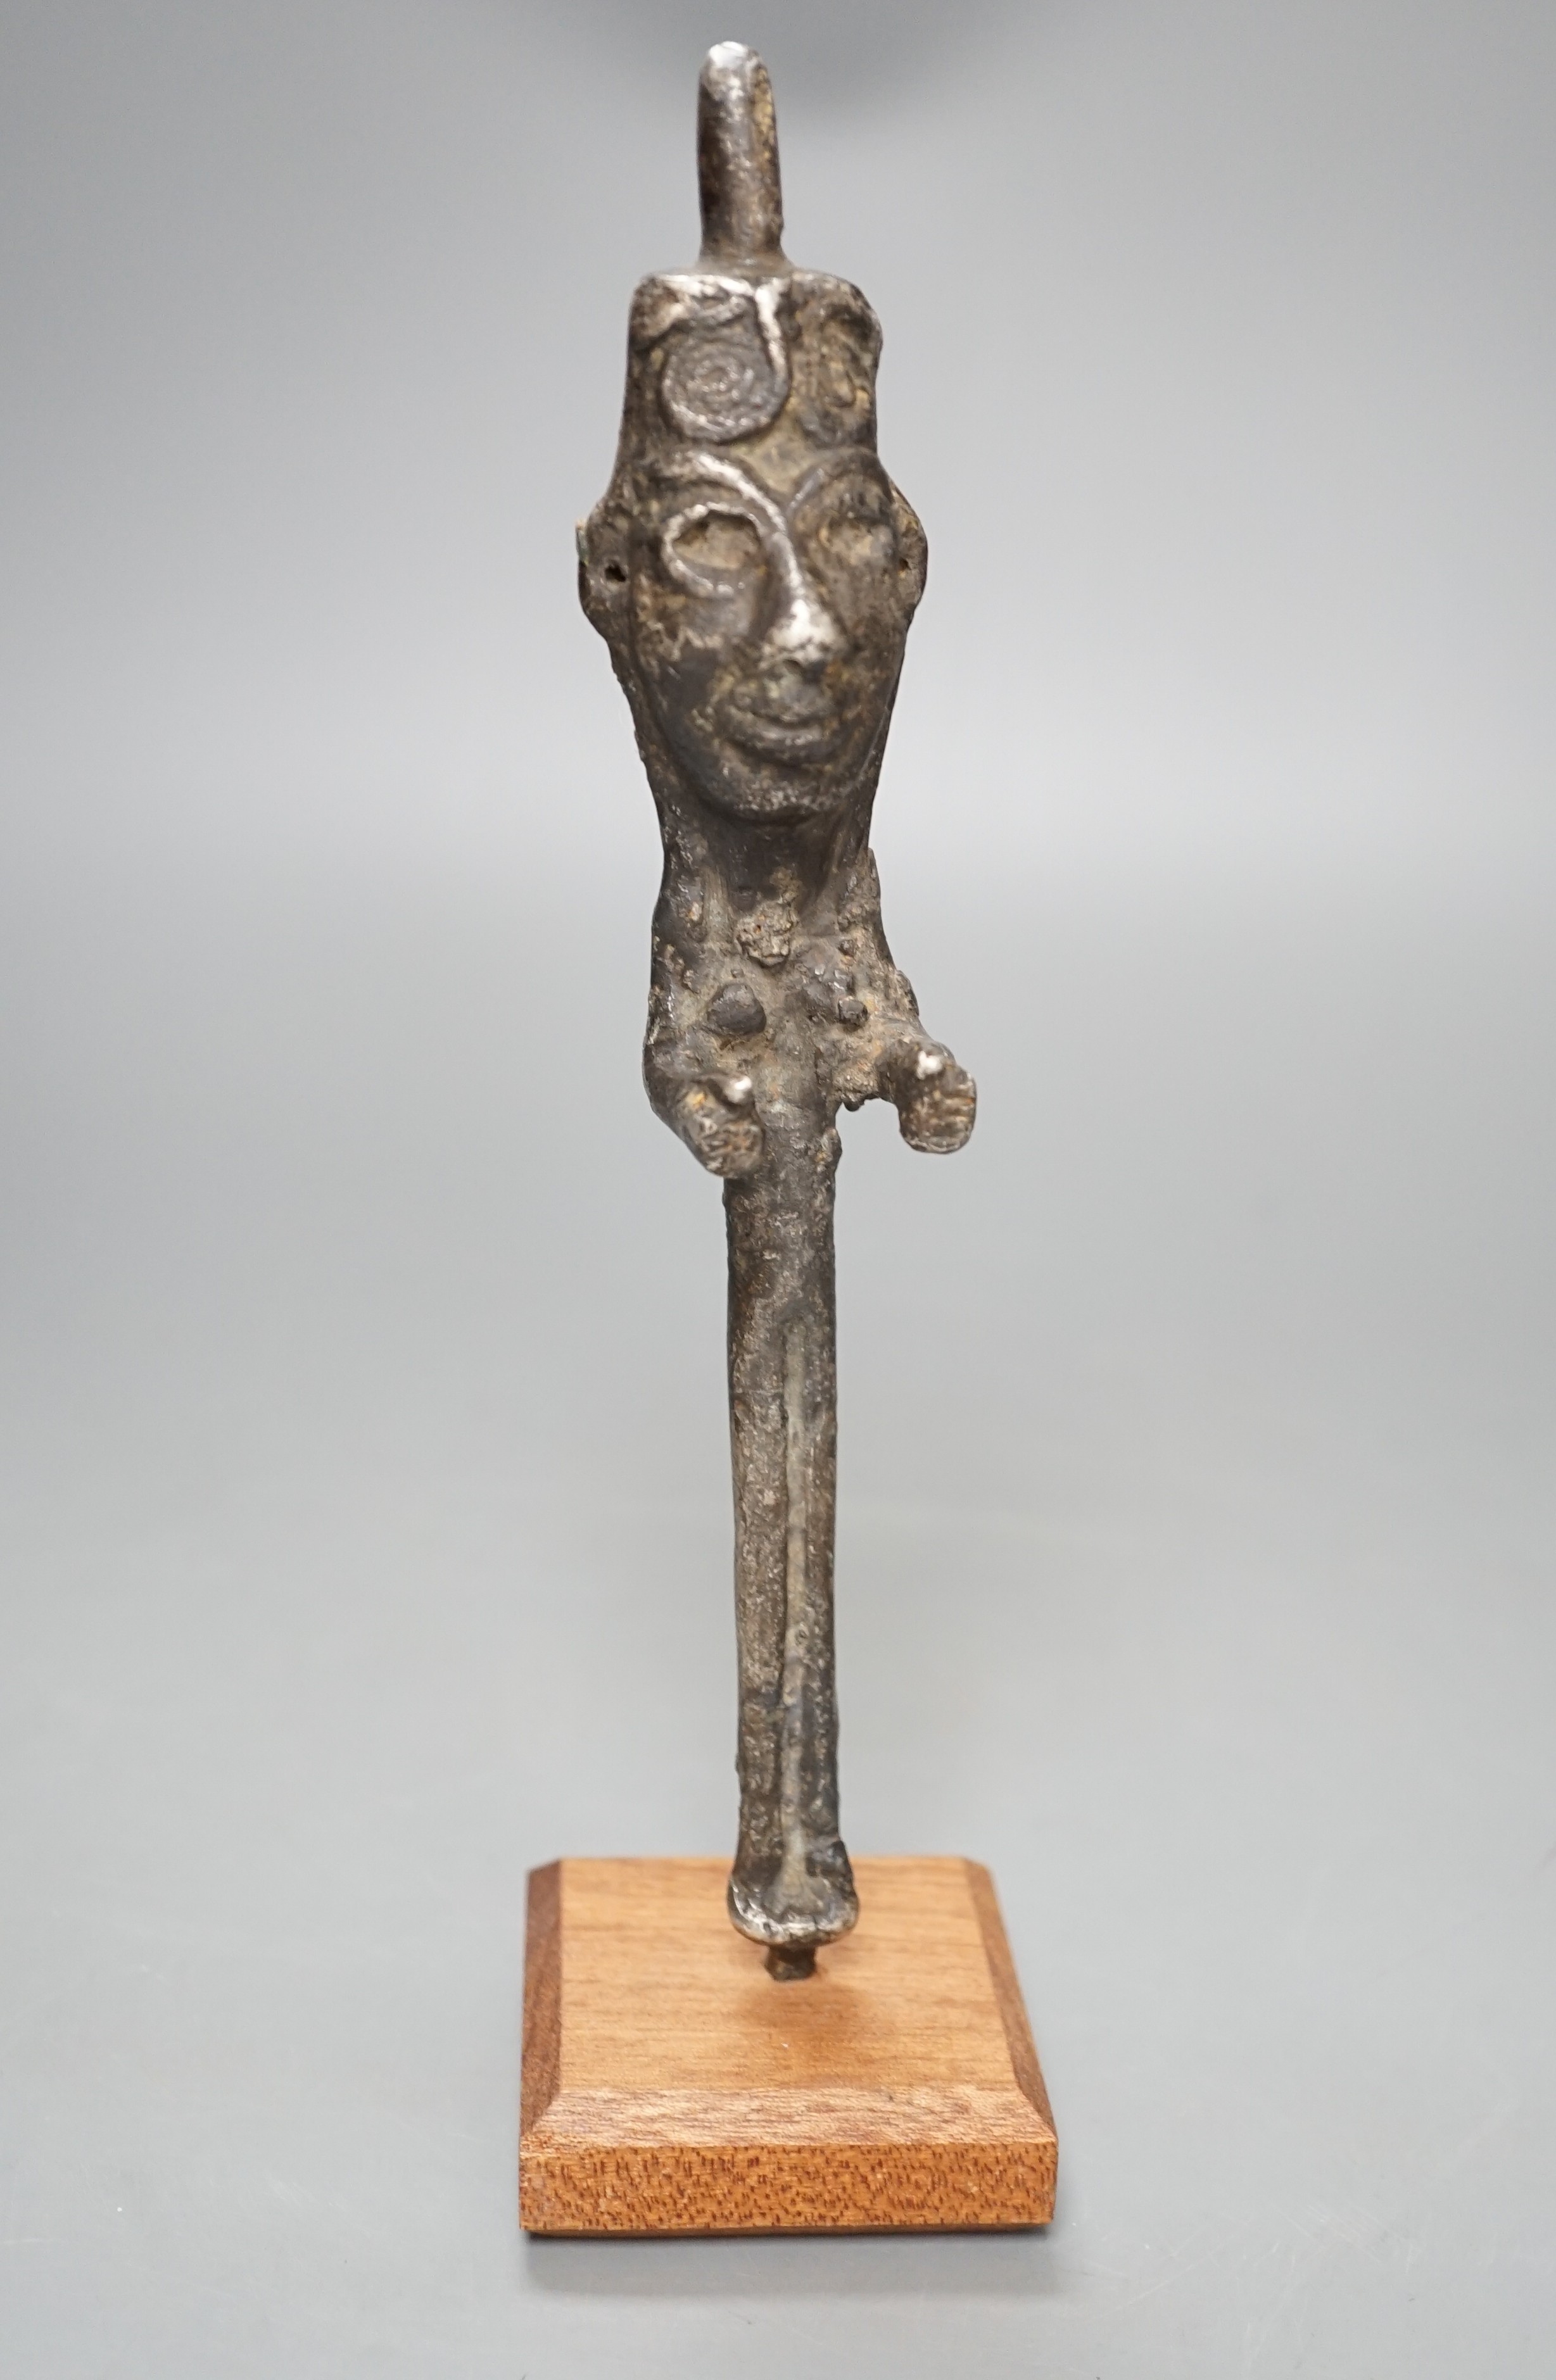 A Yoruba Edan Ogboni figural staff, Nigeria 24cm tall including stand